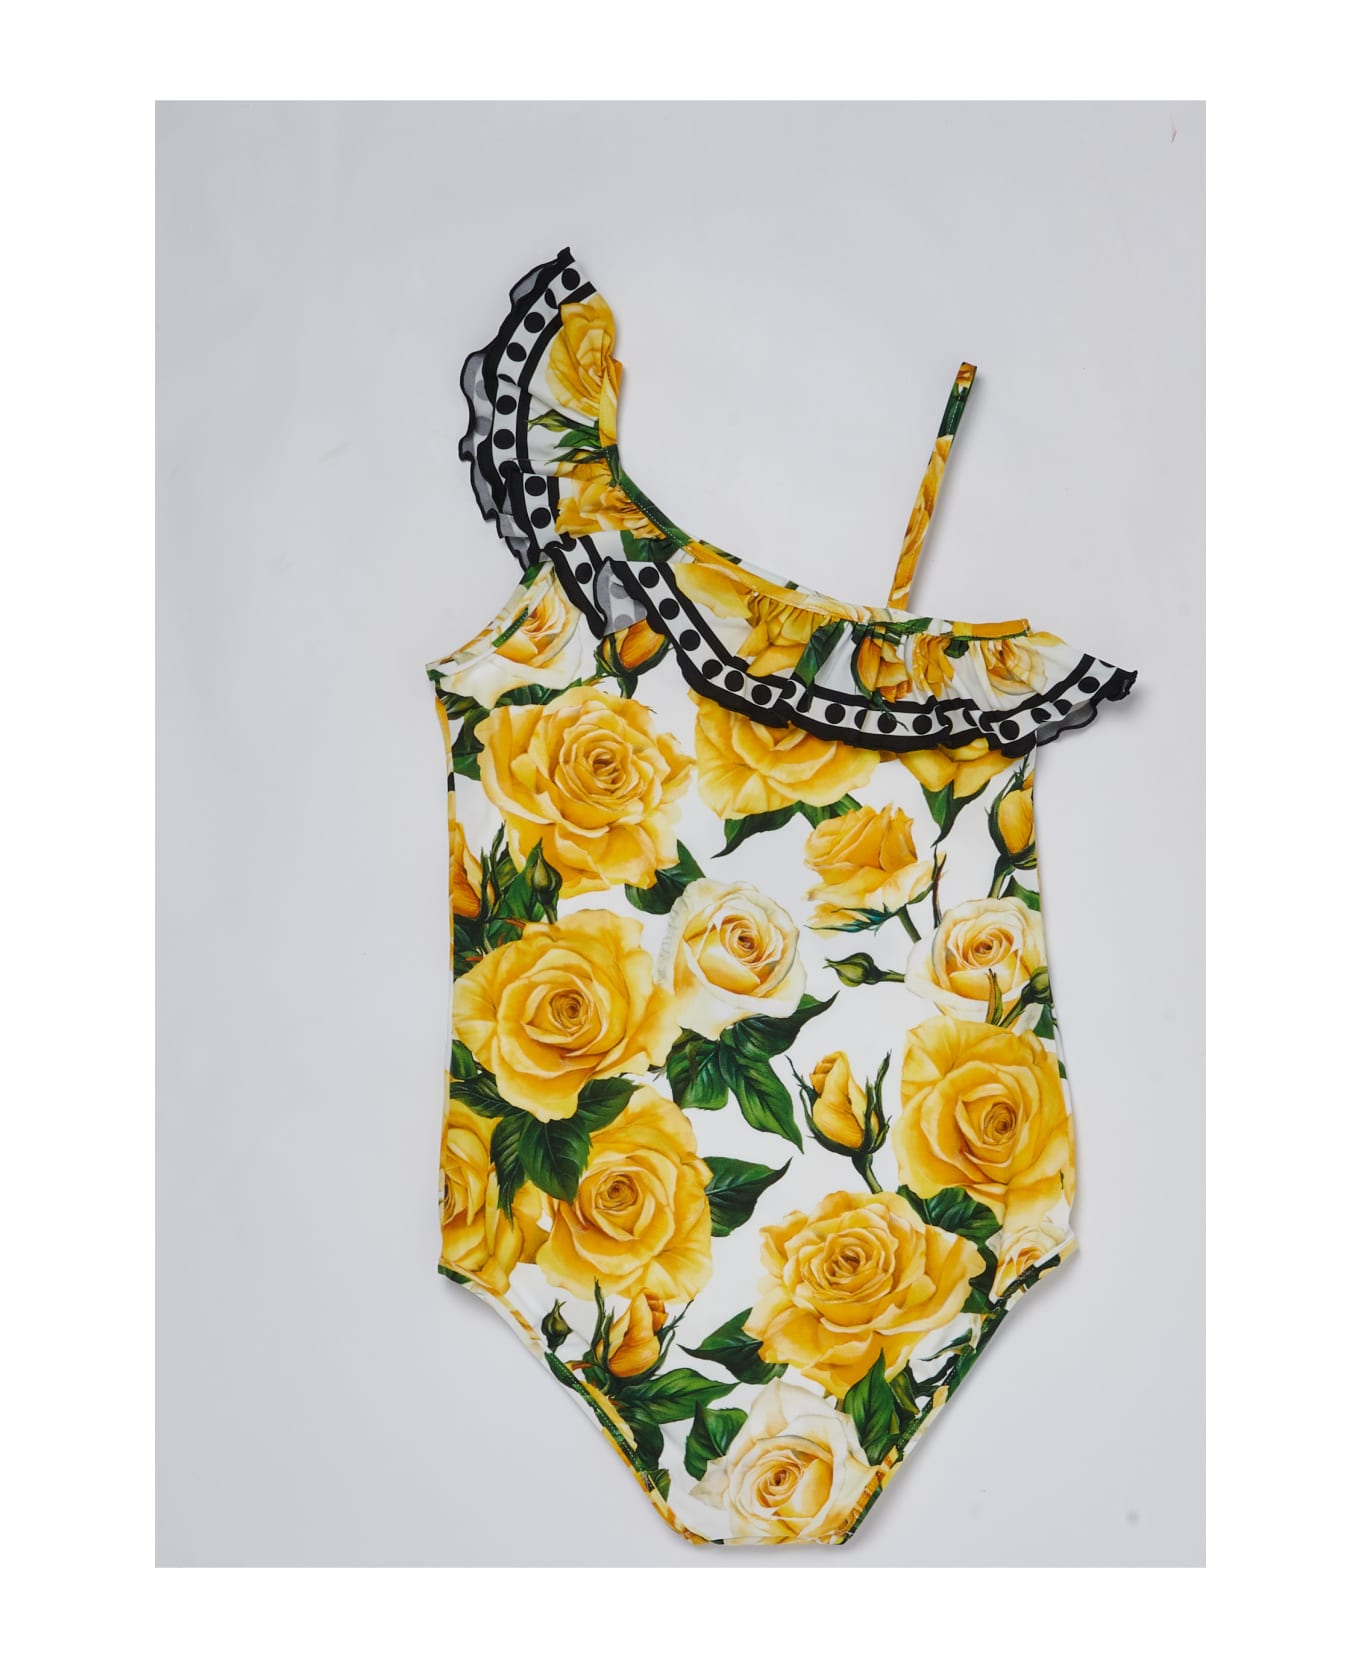 Dolce & Gabbana Swimsuit Swimsuit - BIANCO-GIALLO 水着